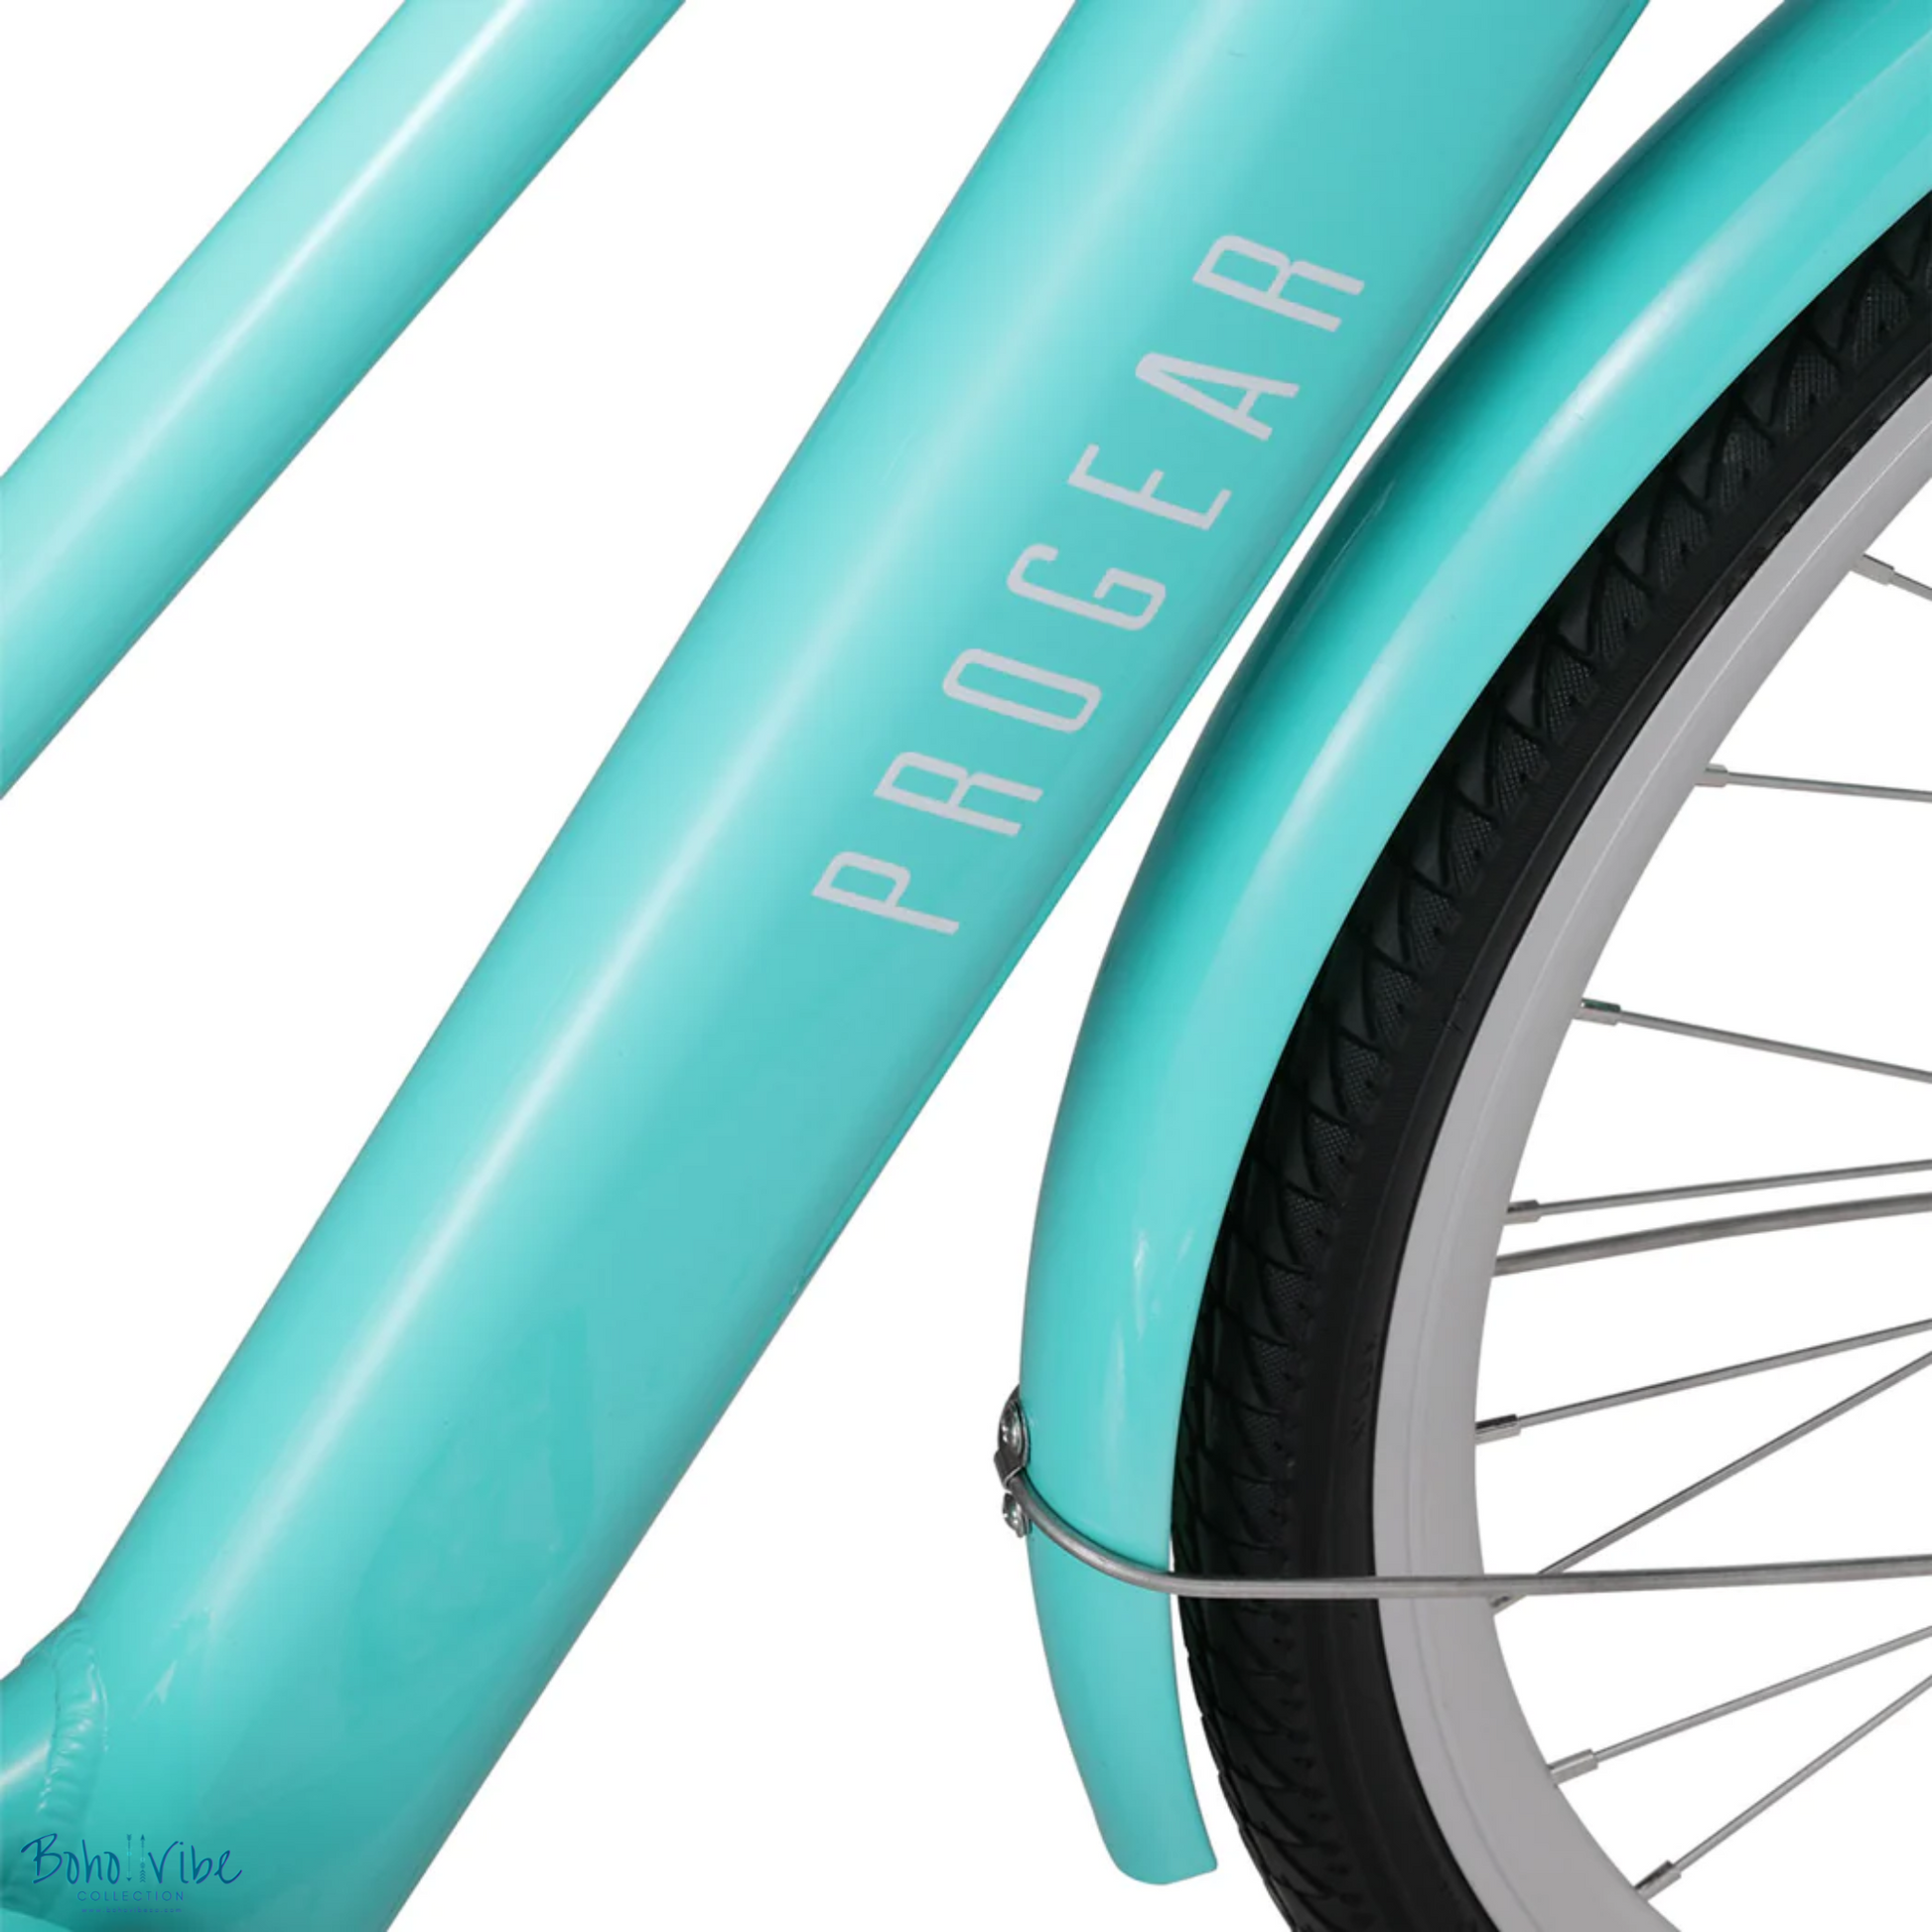 Boho ↡↟ Vibe Collection ↠ Retro Electric Bike Progear Seaform E-Classique Vintage Teal Coastal E-Bike